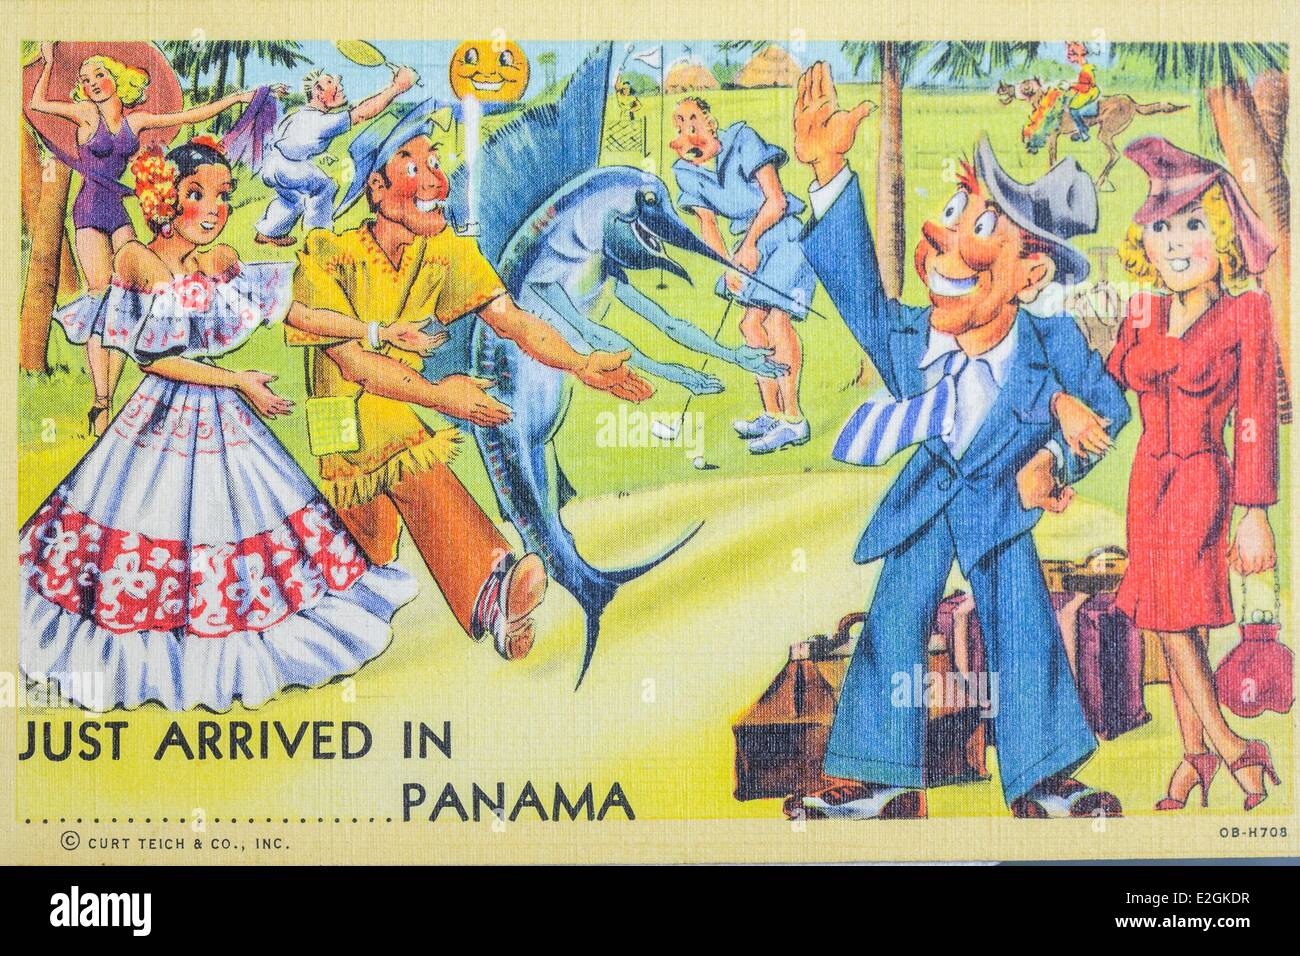 Panama Panama City Plaza Independencia Altstadt Weltkulturerbe durch die UNESCO Casco Antiguo Bezirk Kunst speichern Weil Kunst Postkarte 1960 Stockfoto